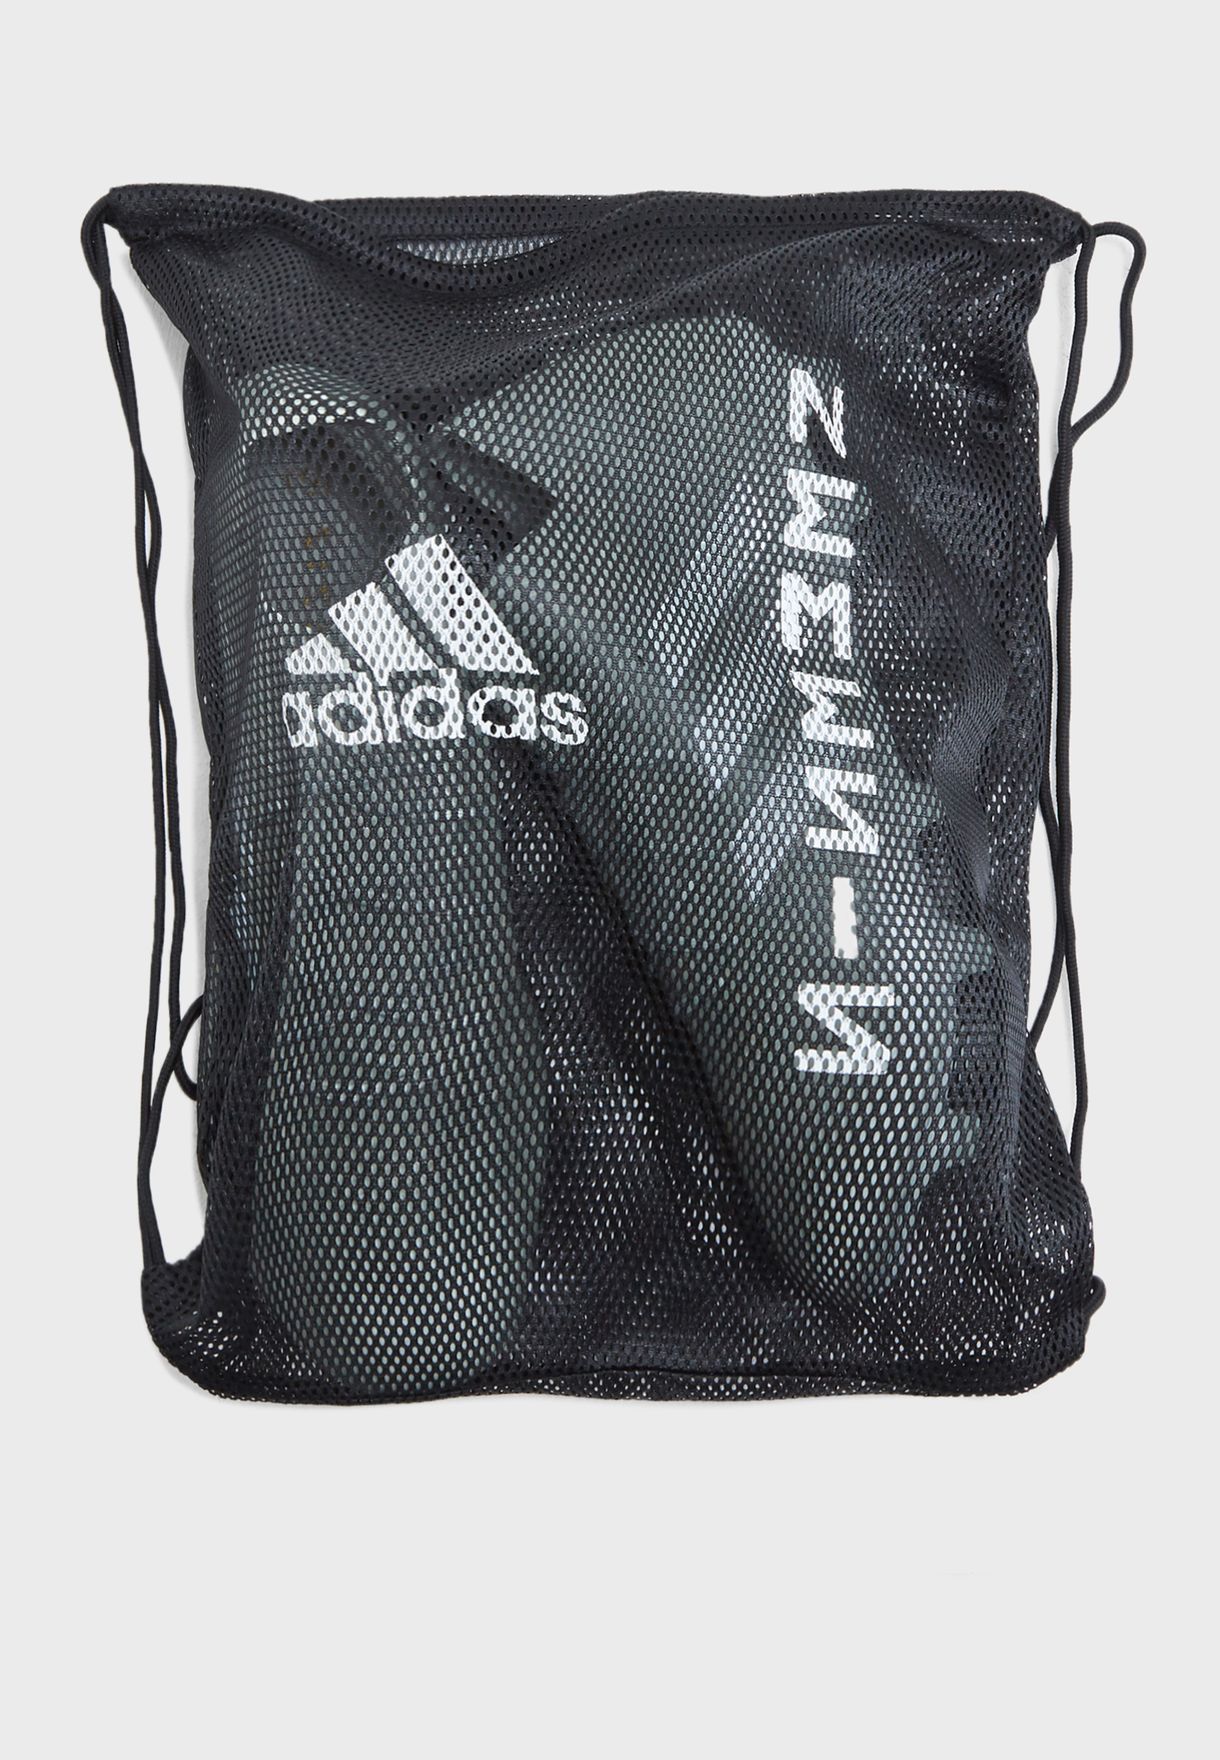 adidas nemeziz bag release date 2fe9a ef2dd